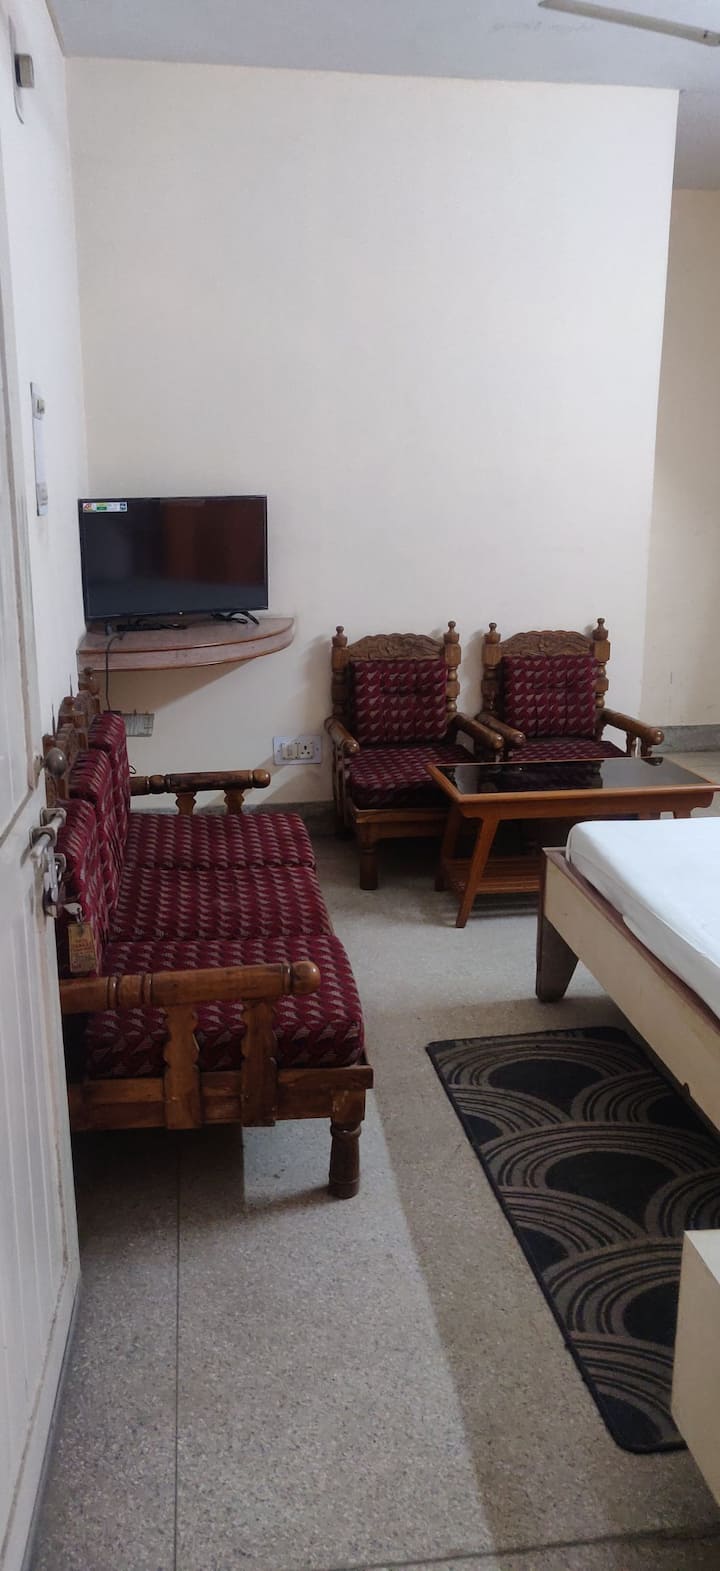 Homely Stay In Hotel Room Near Railway Station - Gaya